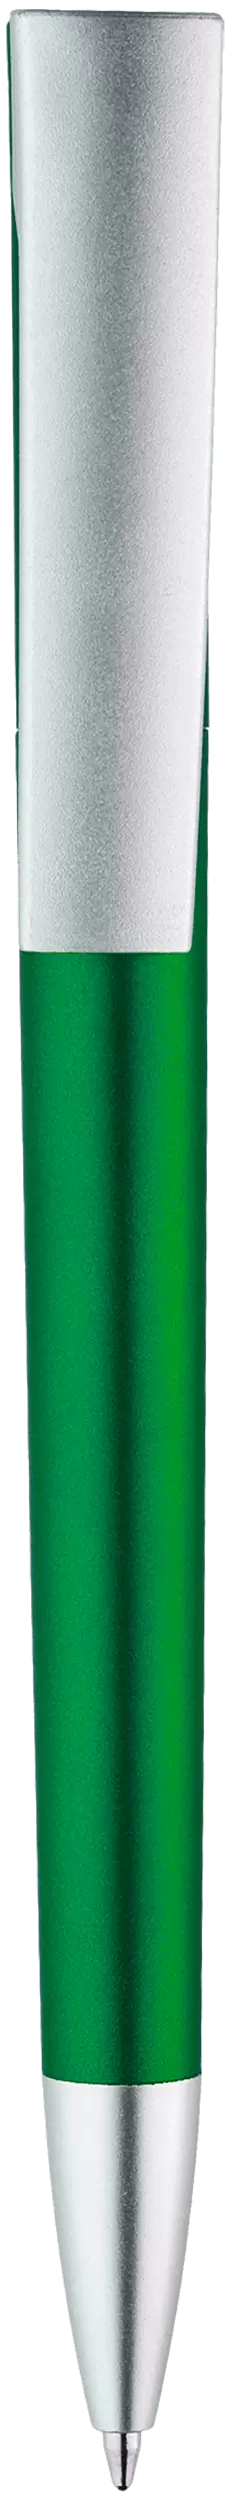 Ручка ZETA METALLIC Зеленая 1014-02